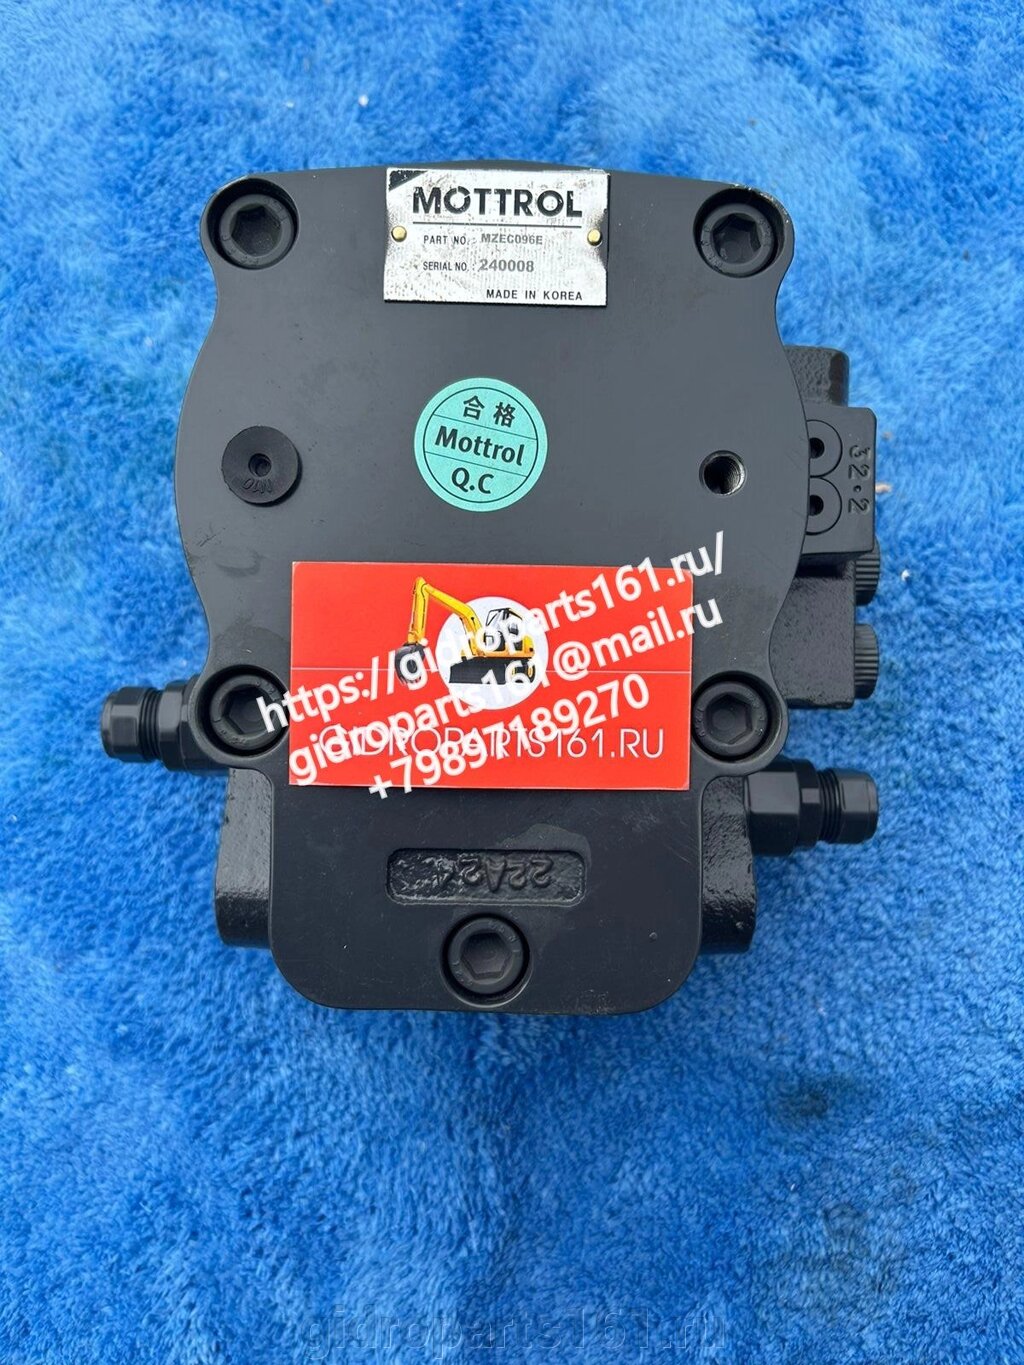 Гидромотор поворота MOTTROL MZEC095E (Корея) от компании Гидравлические запчасти 161 - фото 1